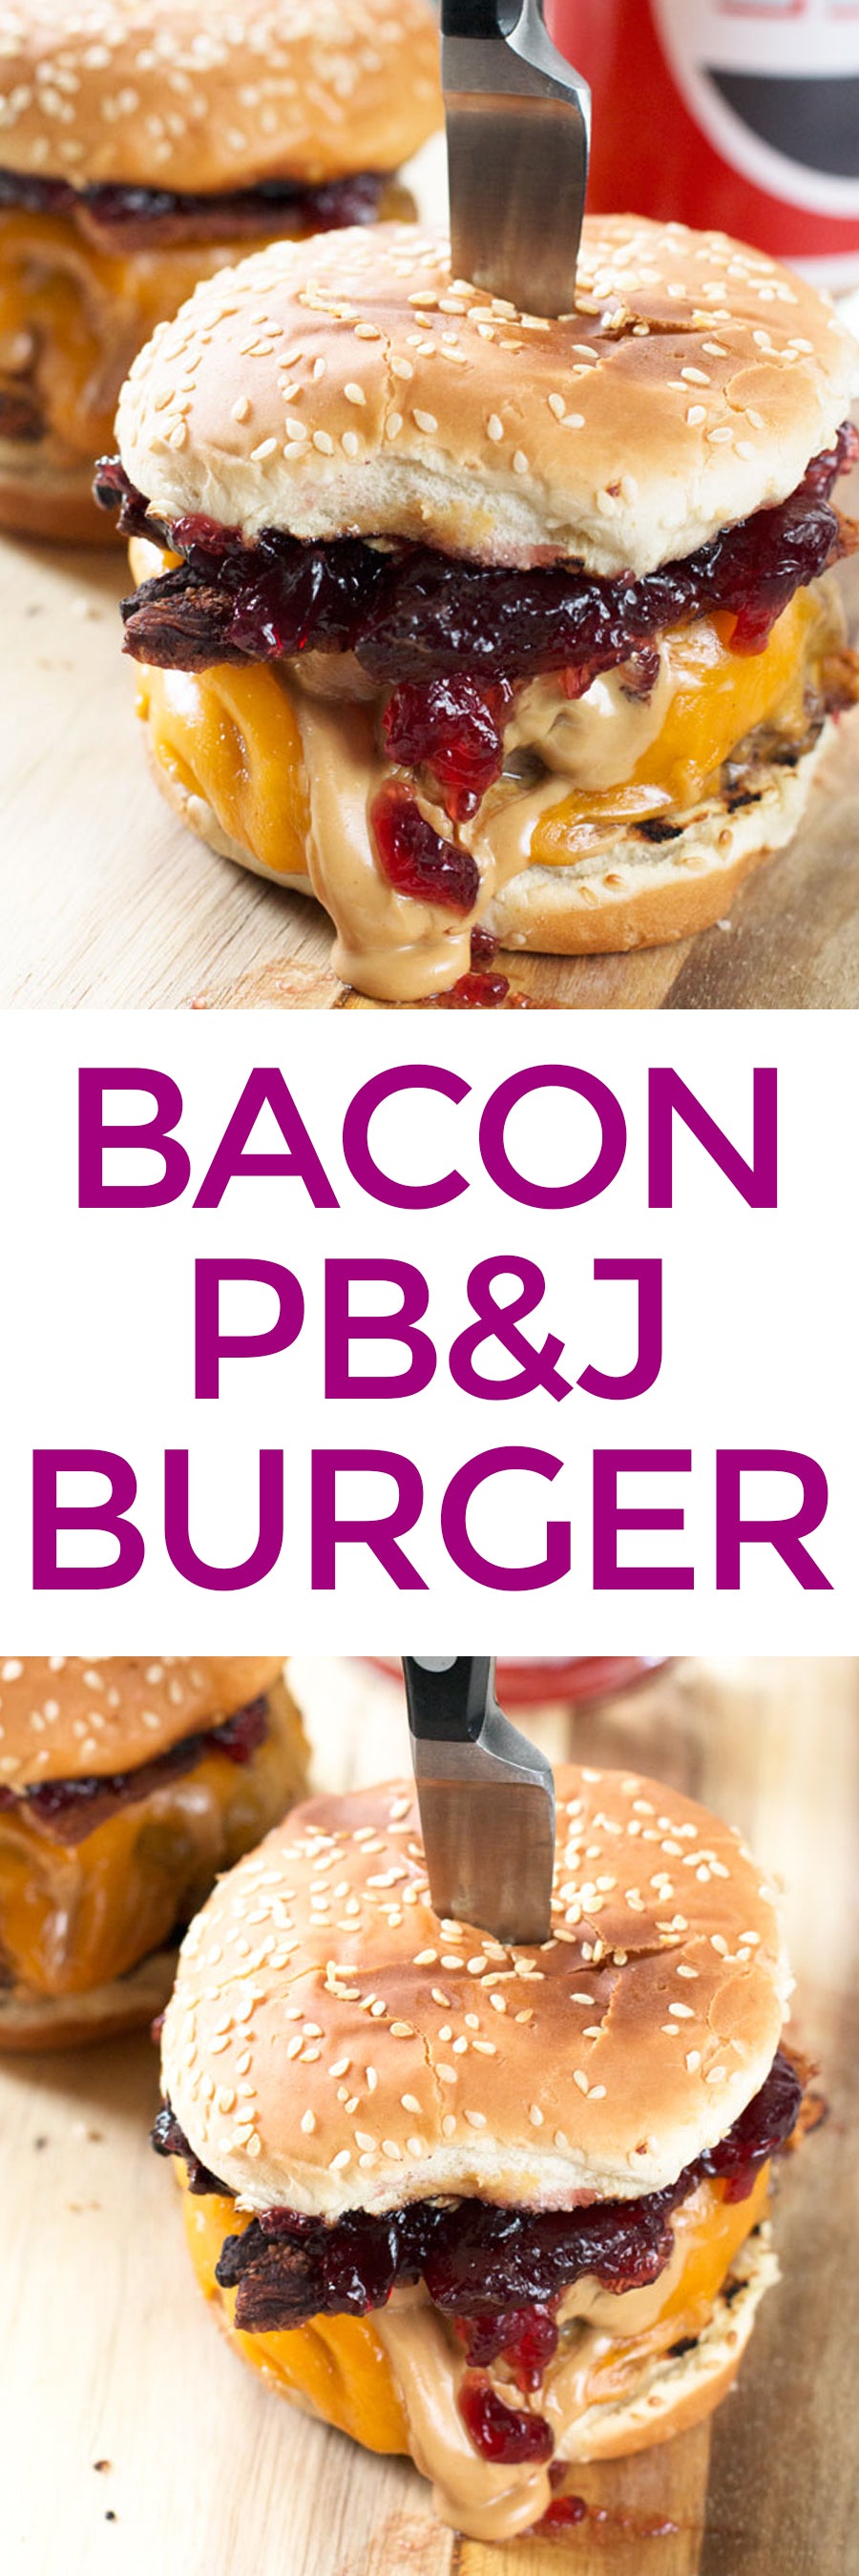 Bacon PB&J Burger | pigofthemonth.com #peanutbutter #jelly #grilling